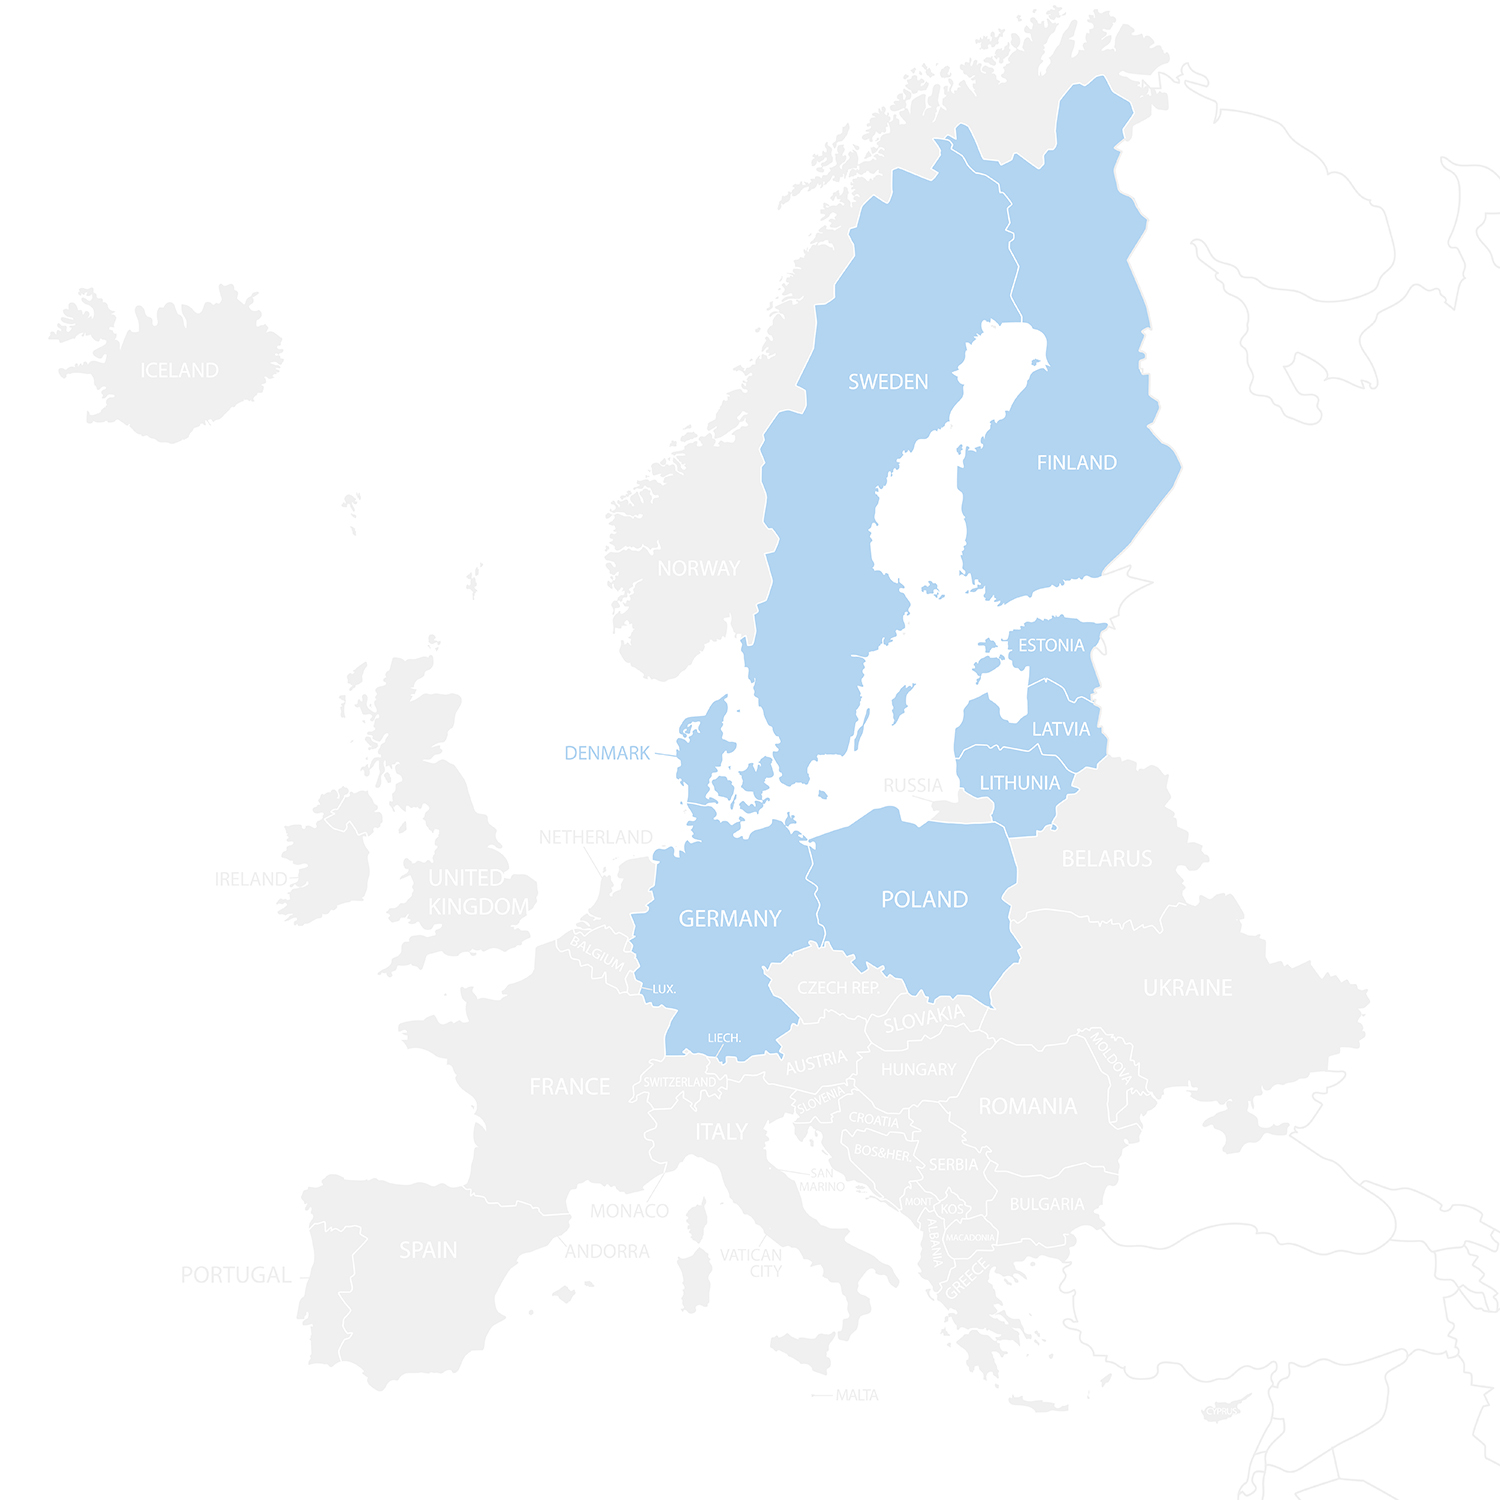 Europe Map_Baltic Sea